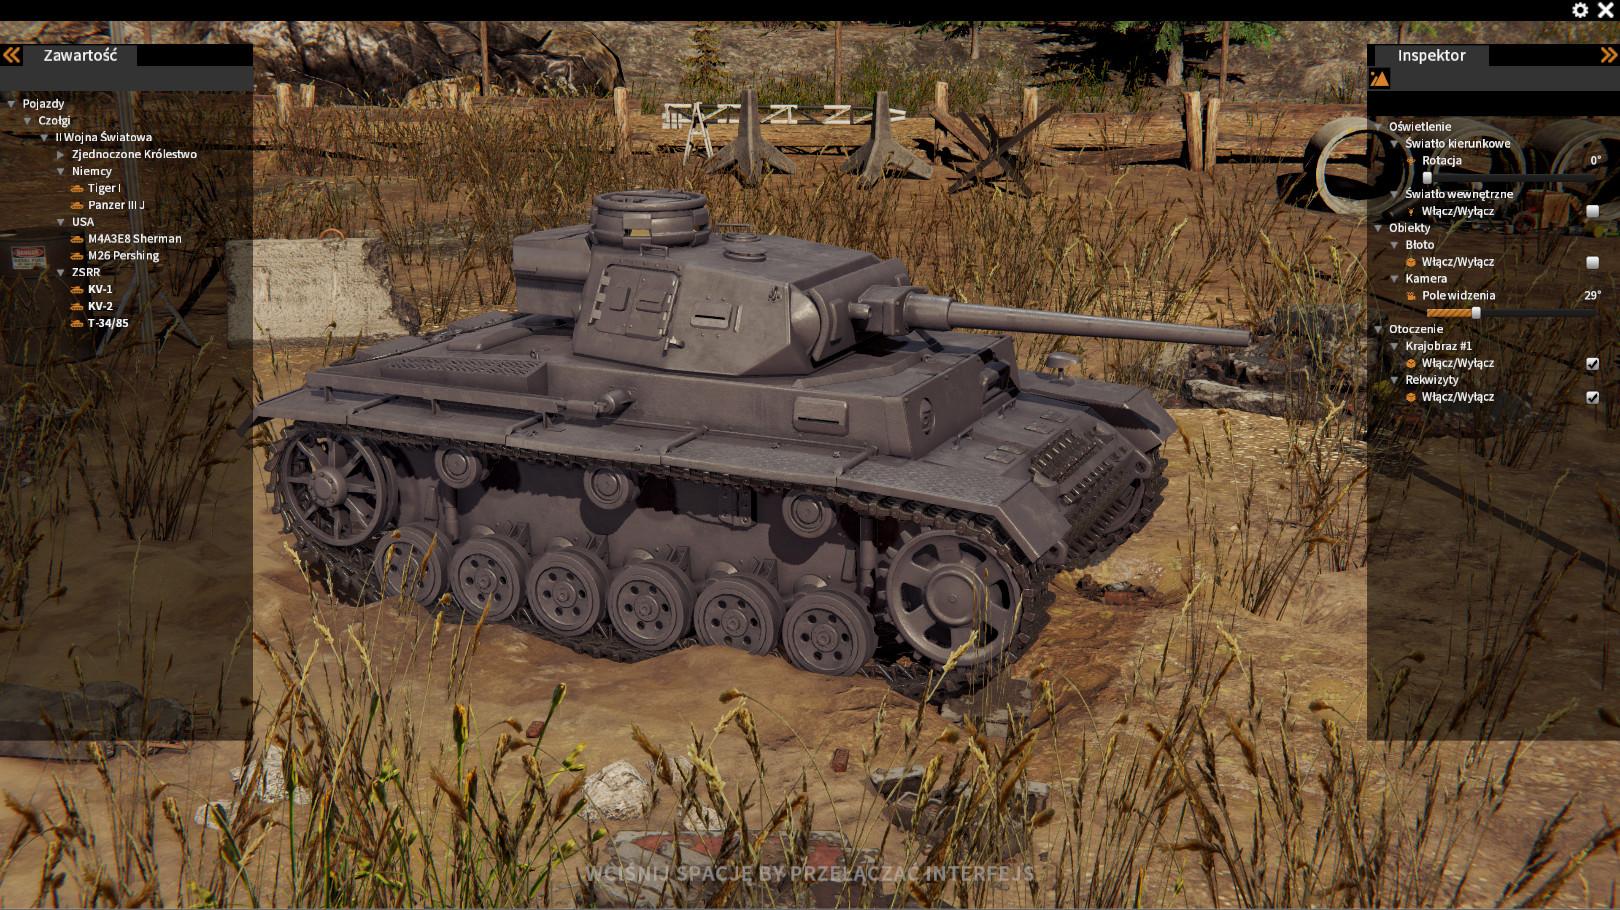 Screenshot №4 from game Tank Mechanic Simulator